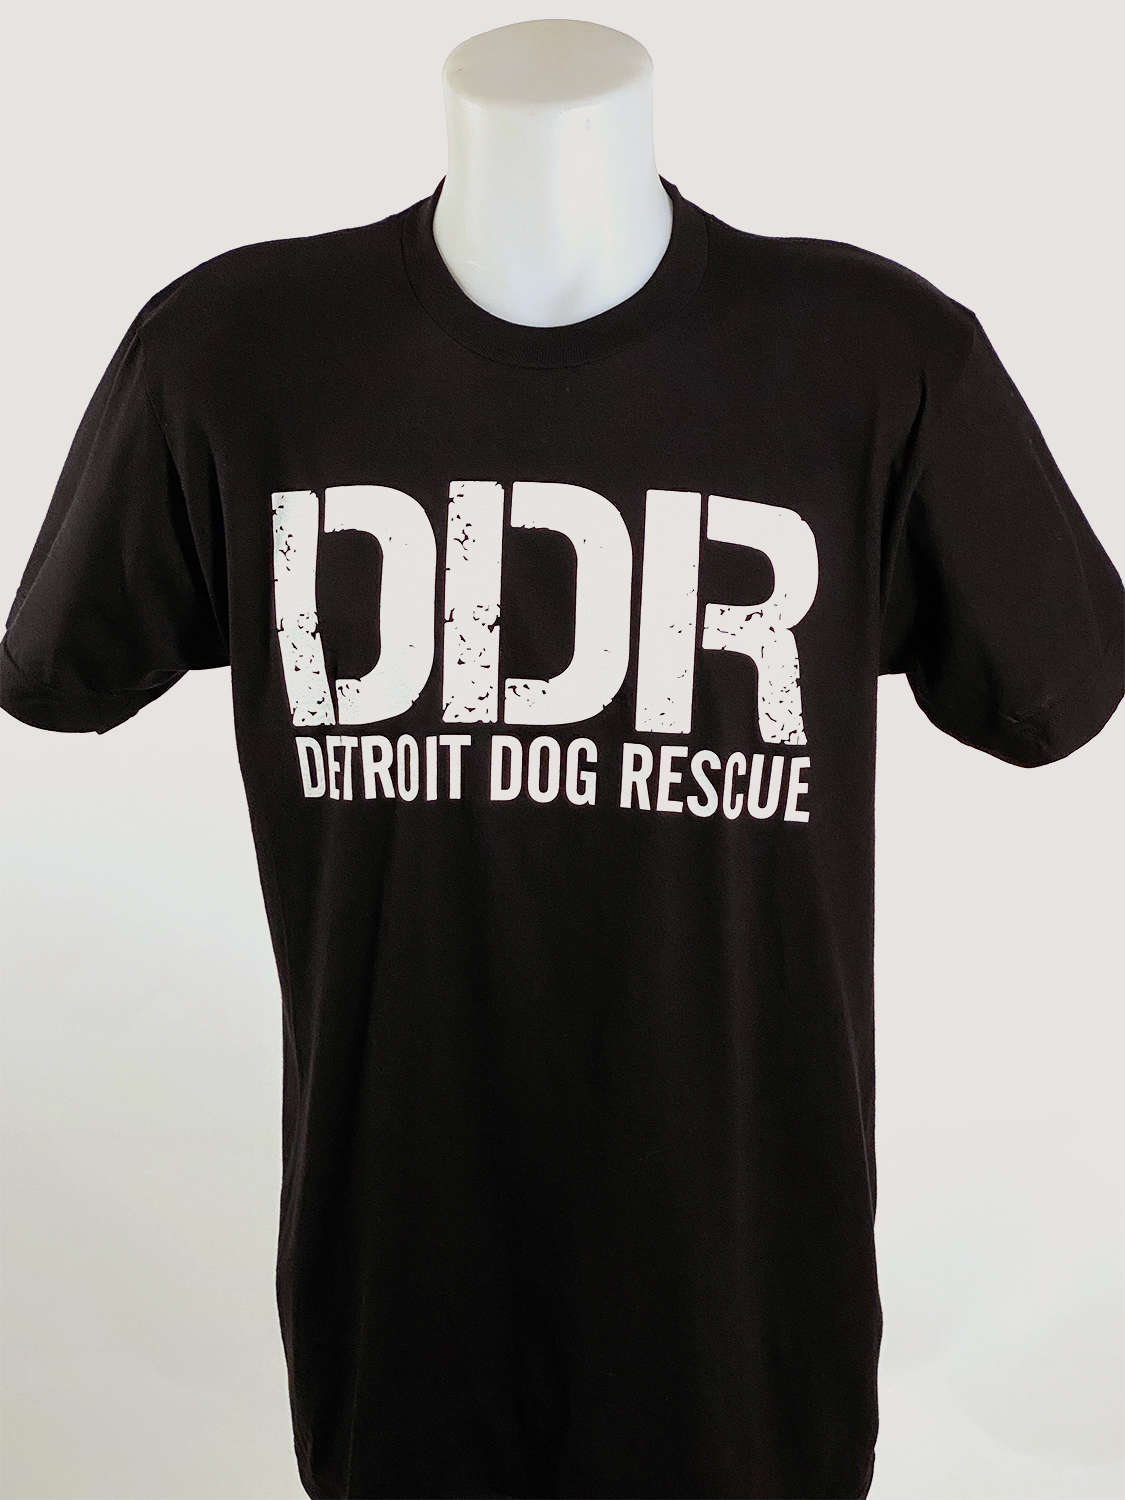 Classic Black Tee - Detroit Dog Rescue